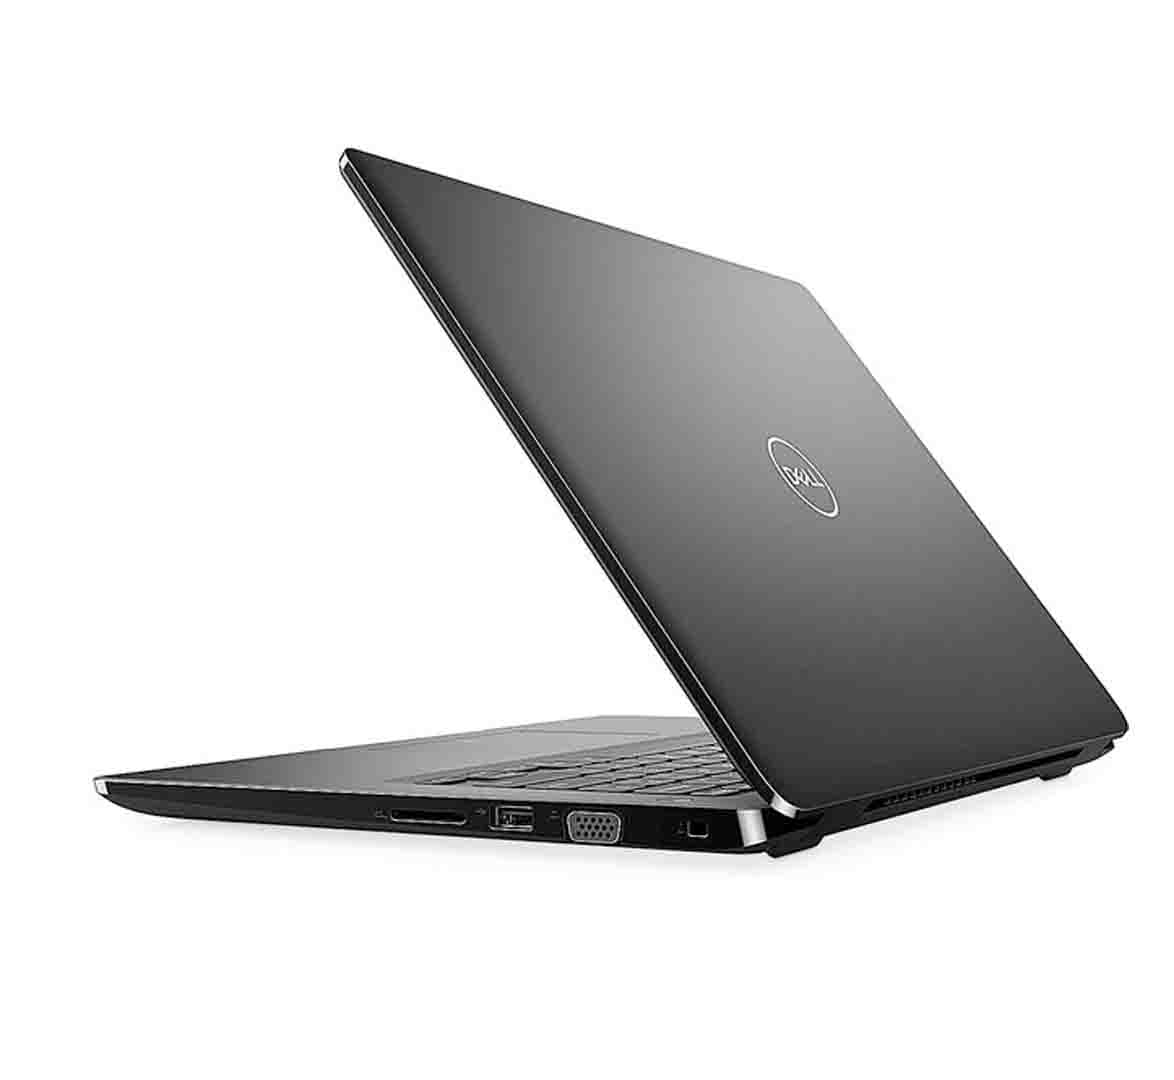 Dell Latitude E3490 Business Laptop, Intel Core i3-7th Gen CPU, 4GB RAM, 500GB HDD, 14 inch Display, Windows 10 Pro, Refurbished Laptop